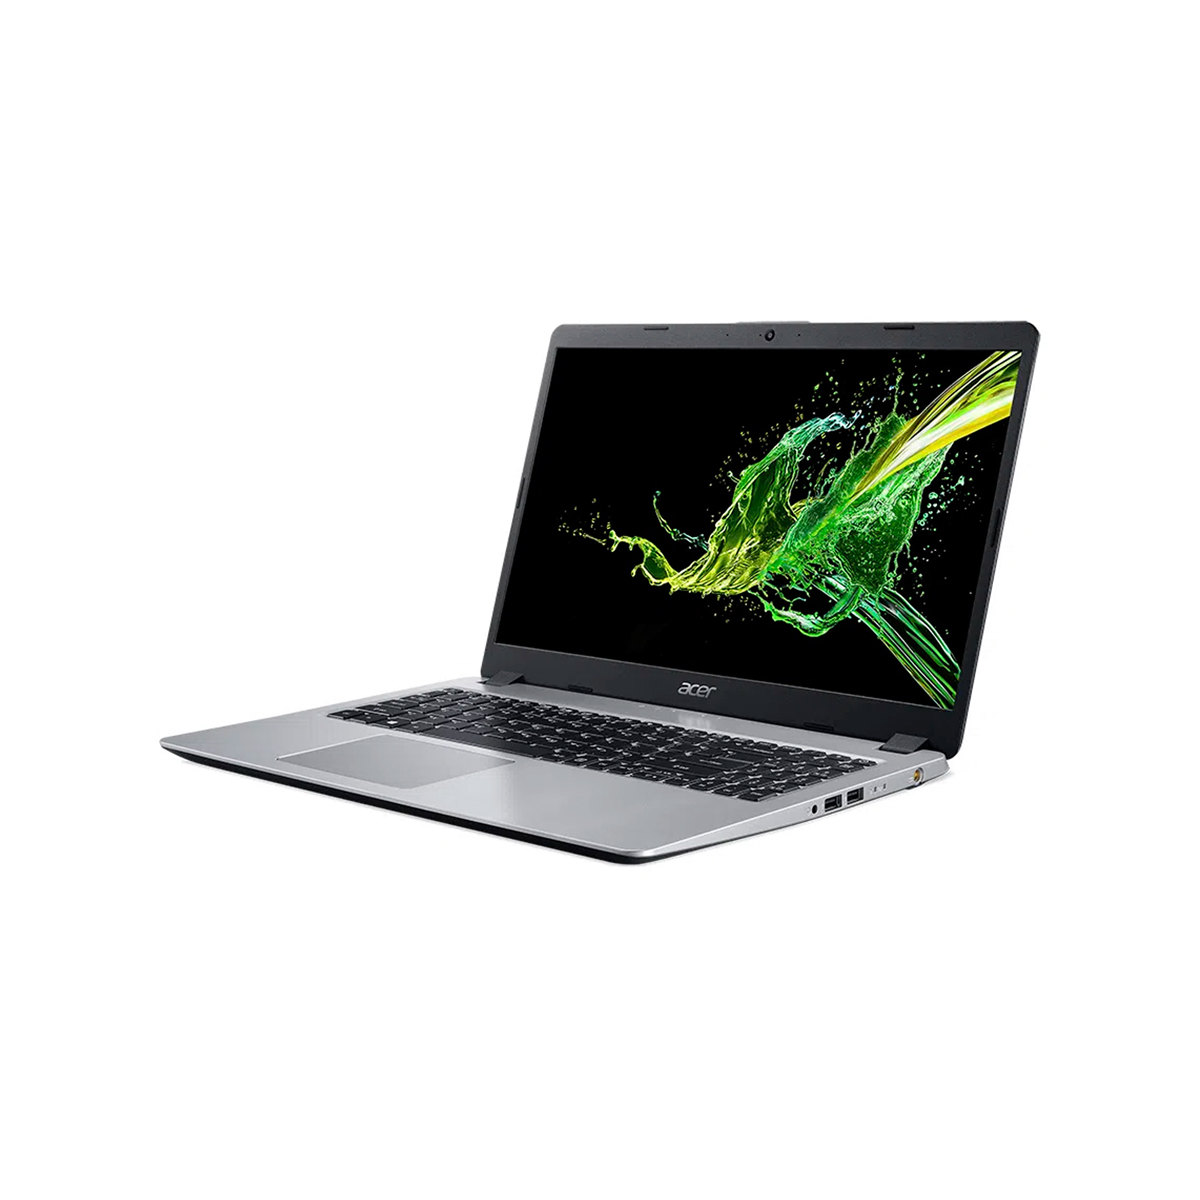 Notebook Acer A515 Core I5 8265u 8gb Ddr4 Hd 1tb Ssd 480gb Tela 15.6' Led Hd Windows 10 Home